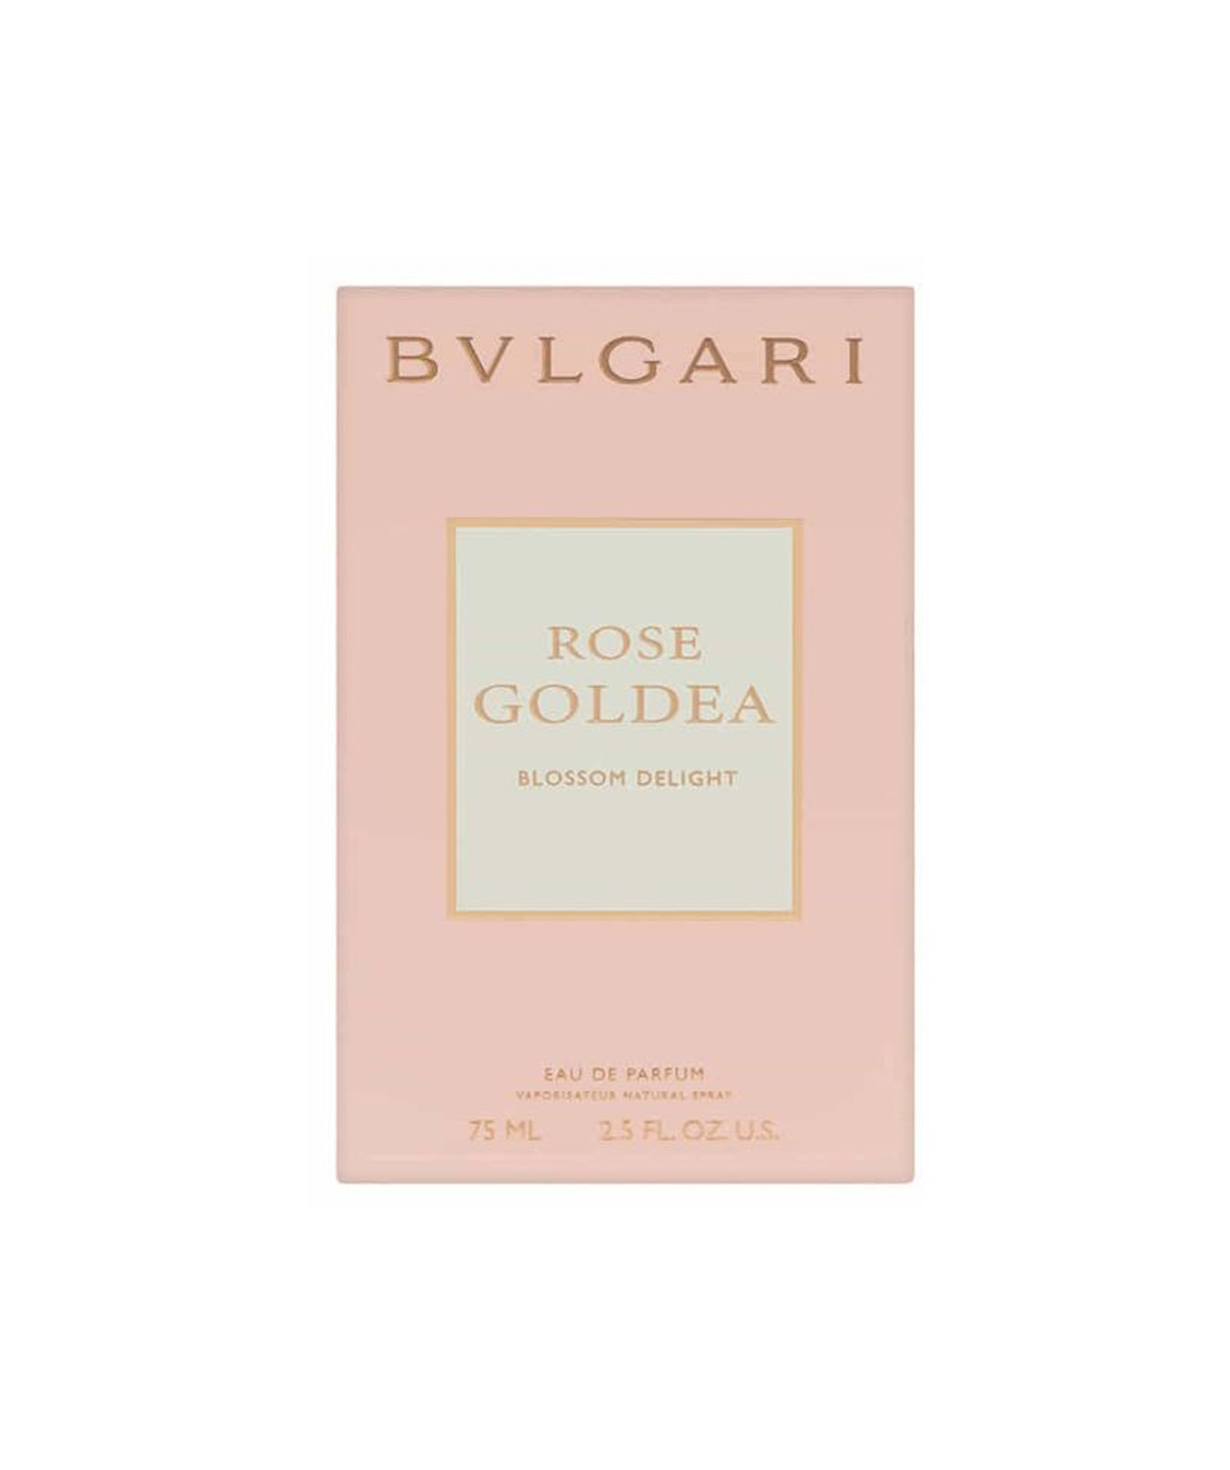 Парфюм «Bvlgari» Rose Goldea, Blossom Delight, женский, 75 мл